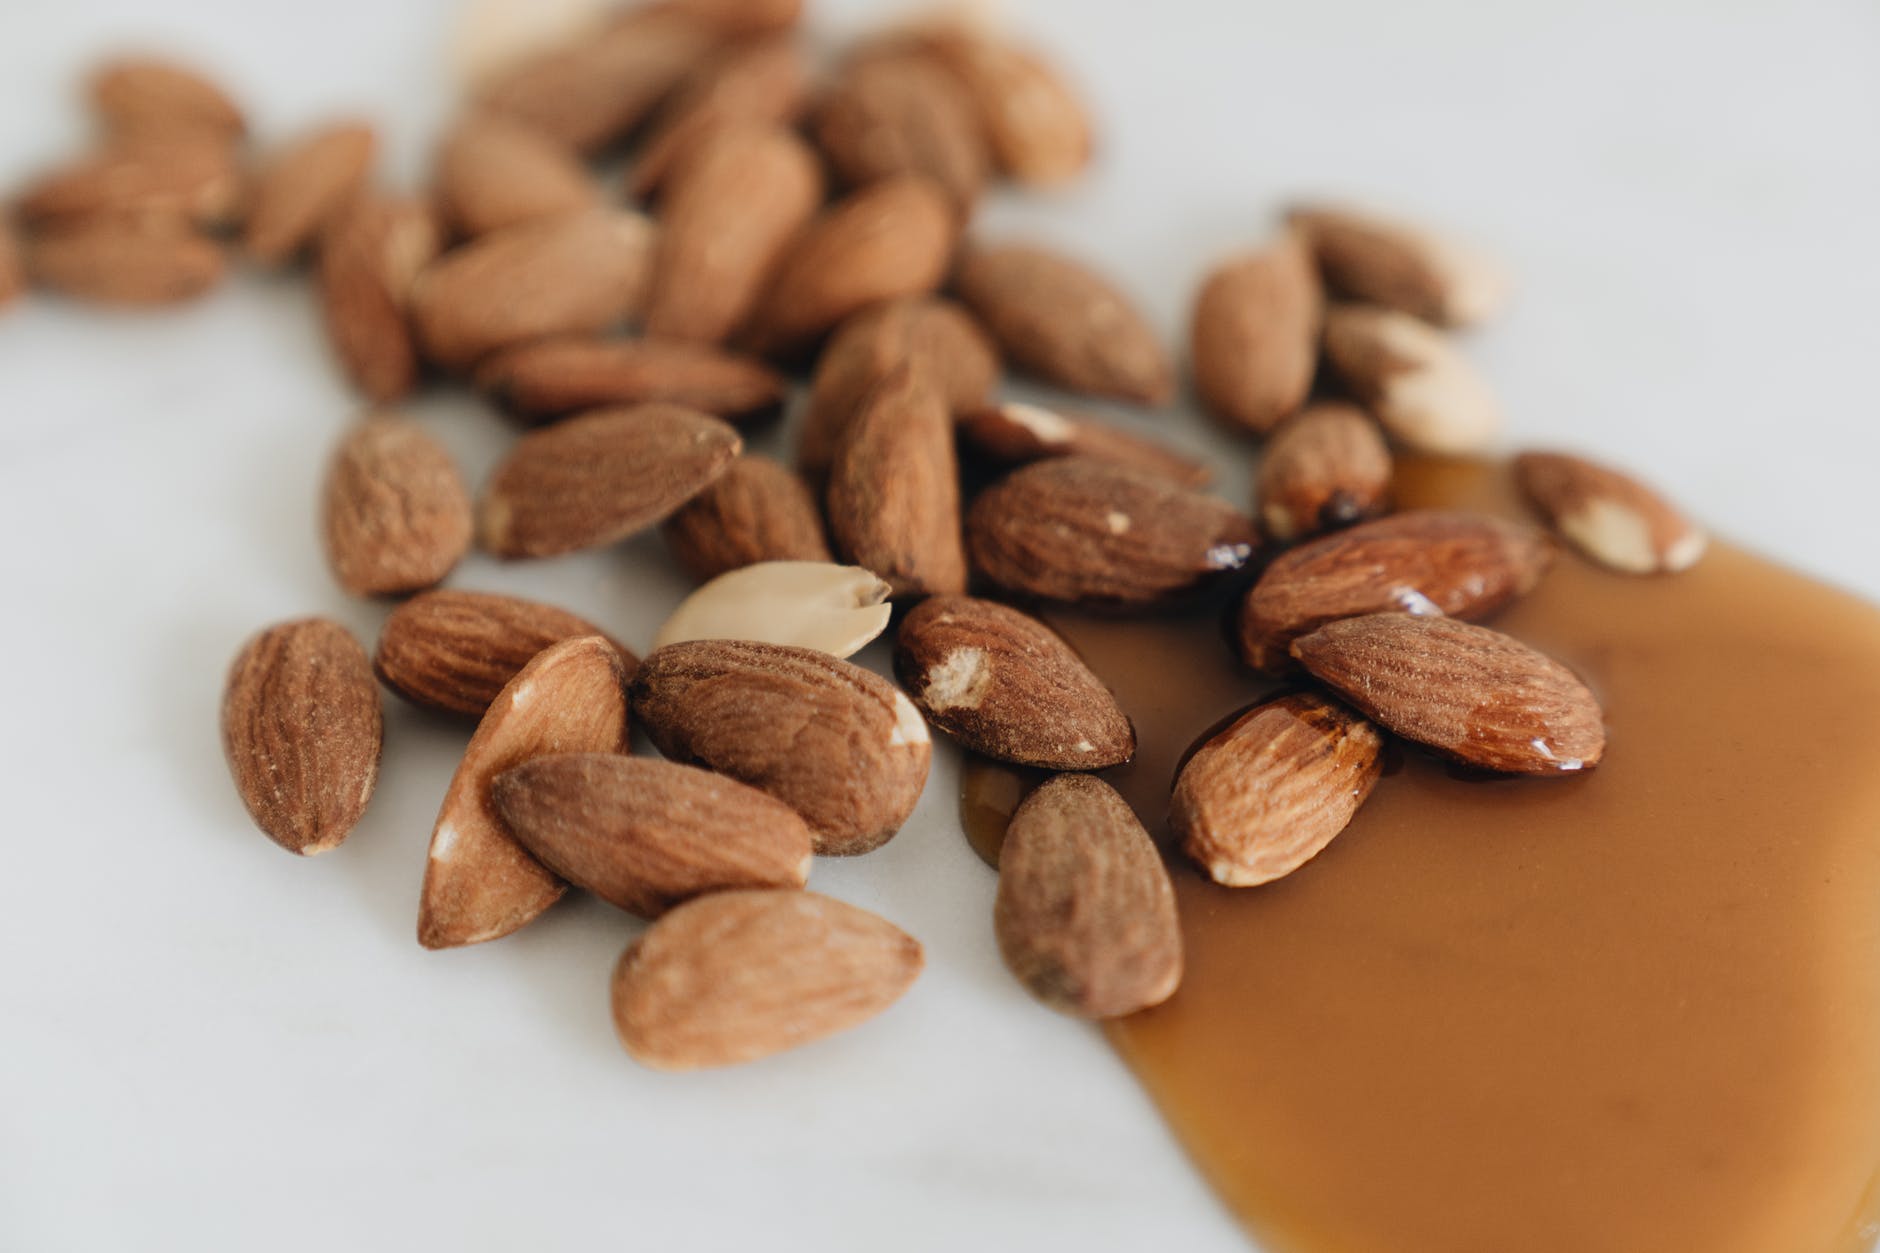 close up photo of almonds